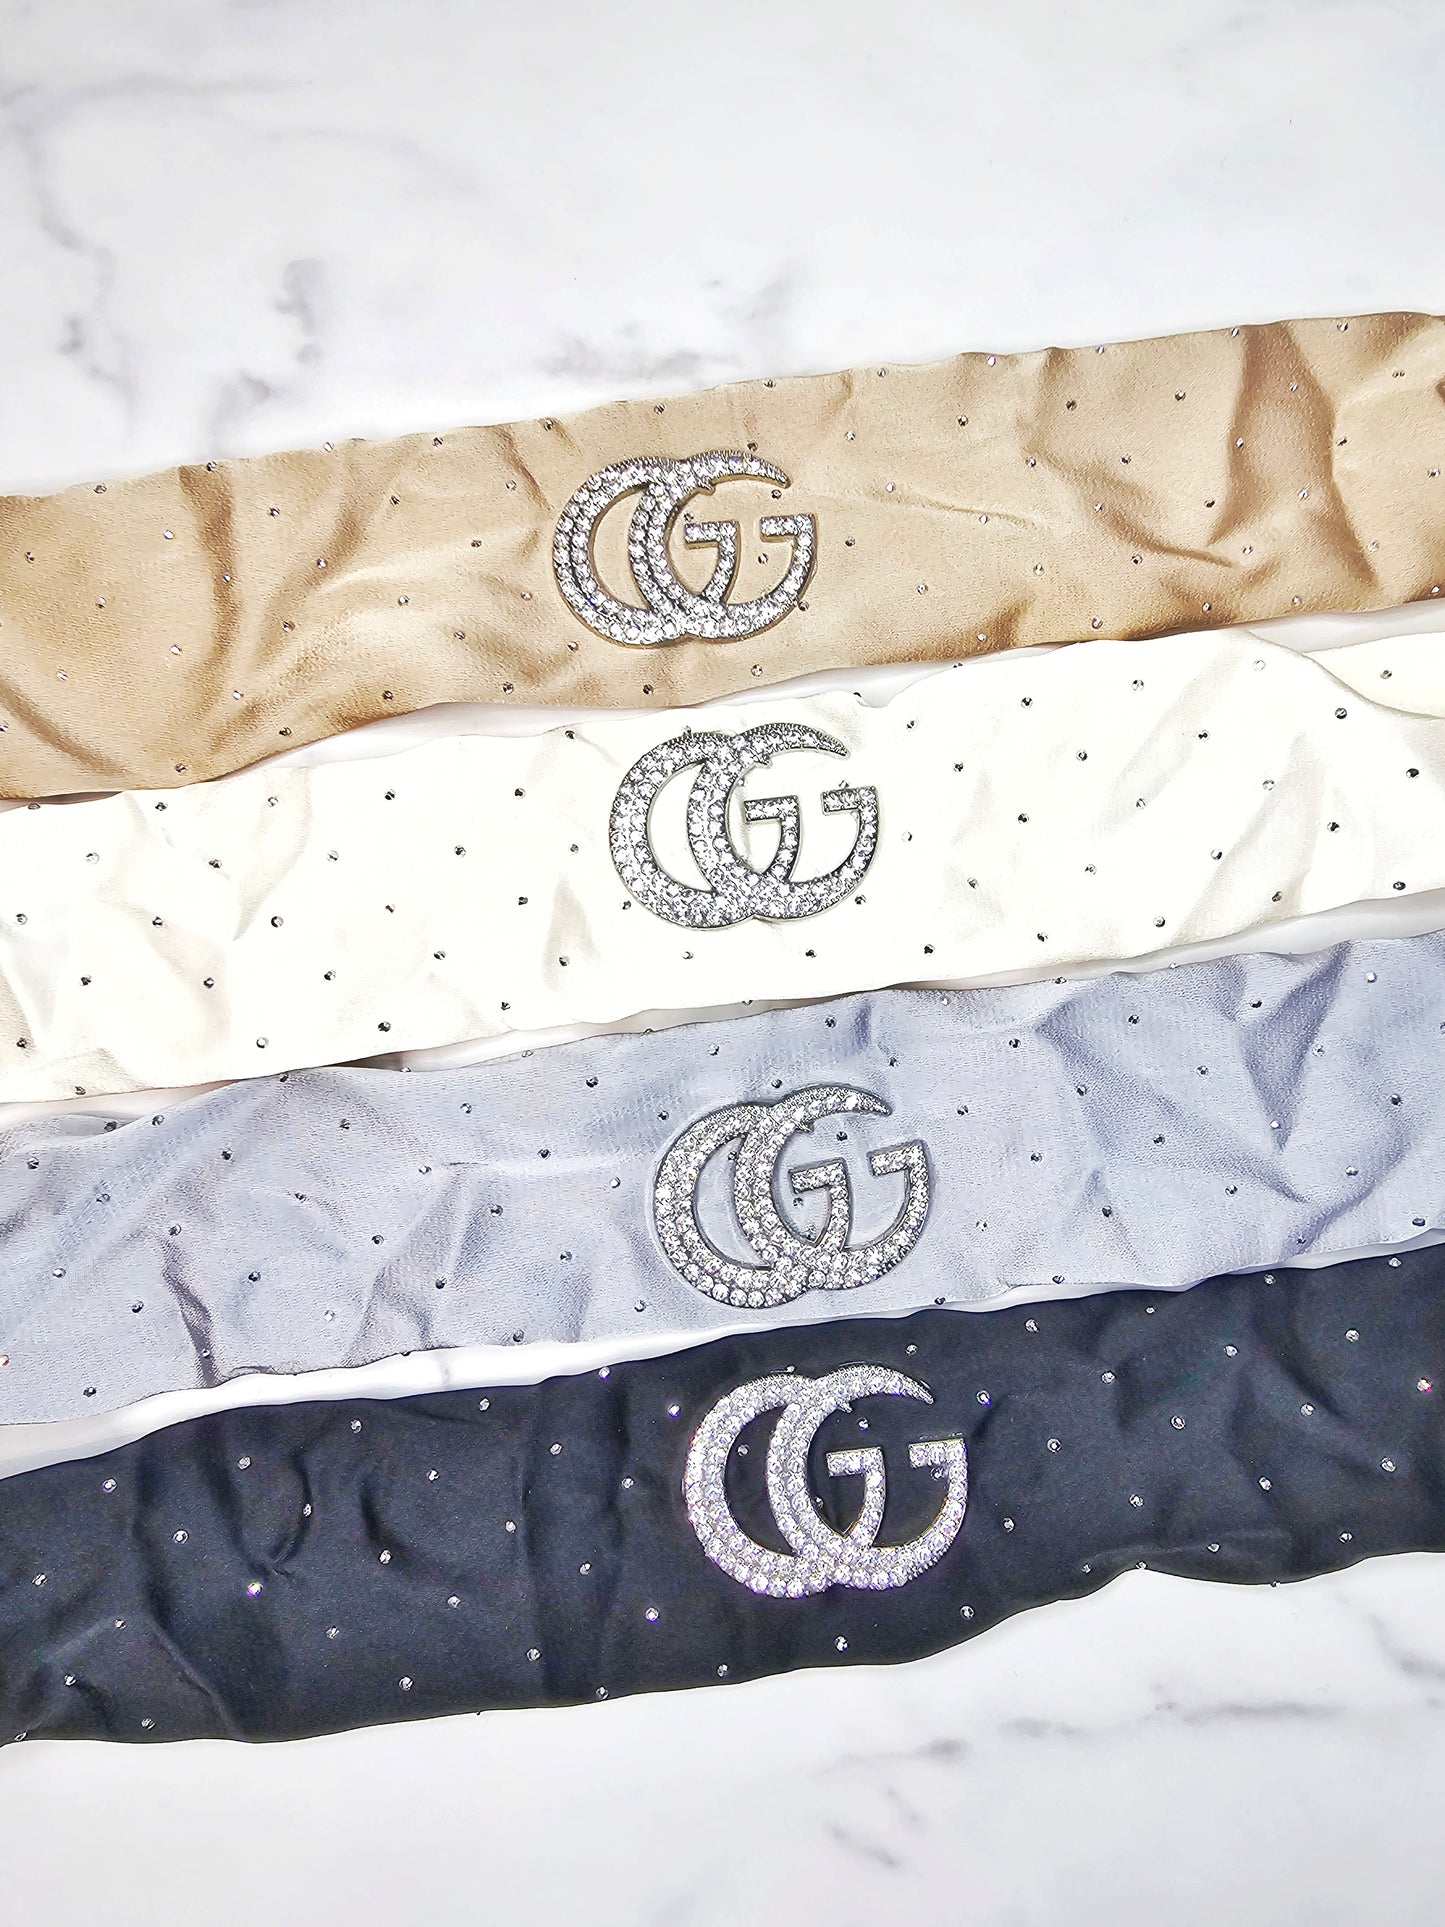 diamanté Gucci croc strap covers, come in pairs!